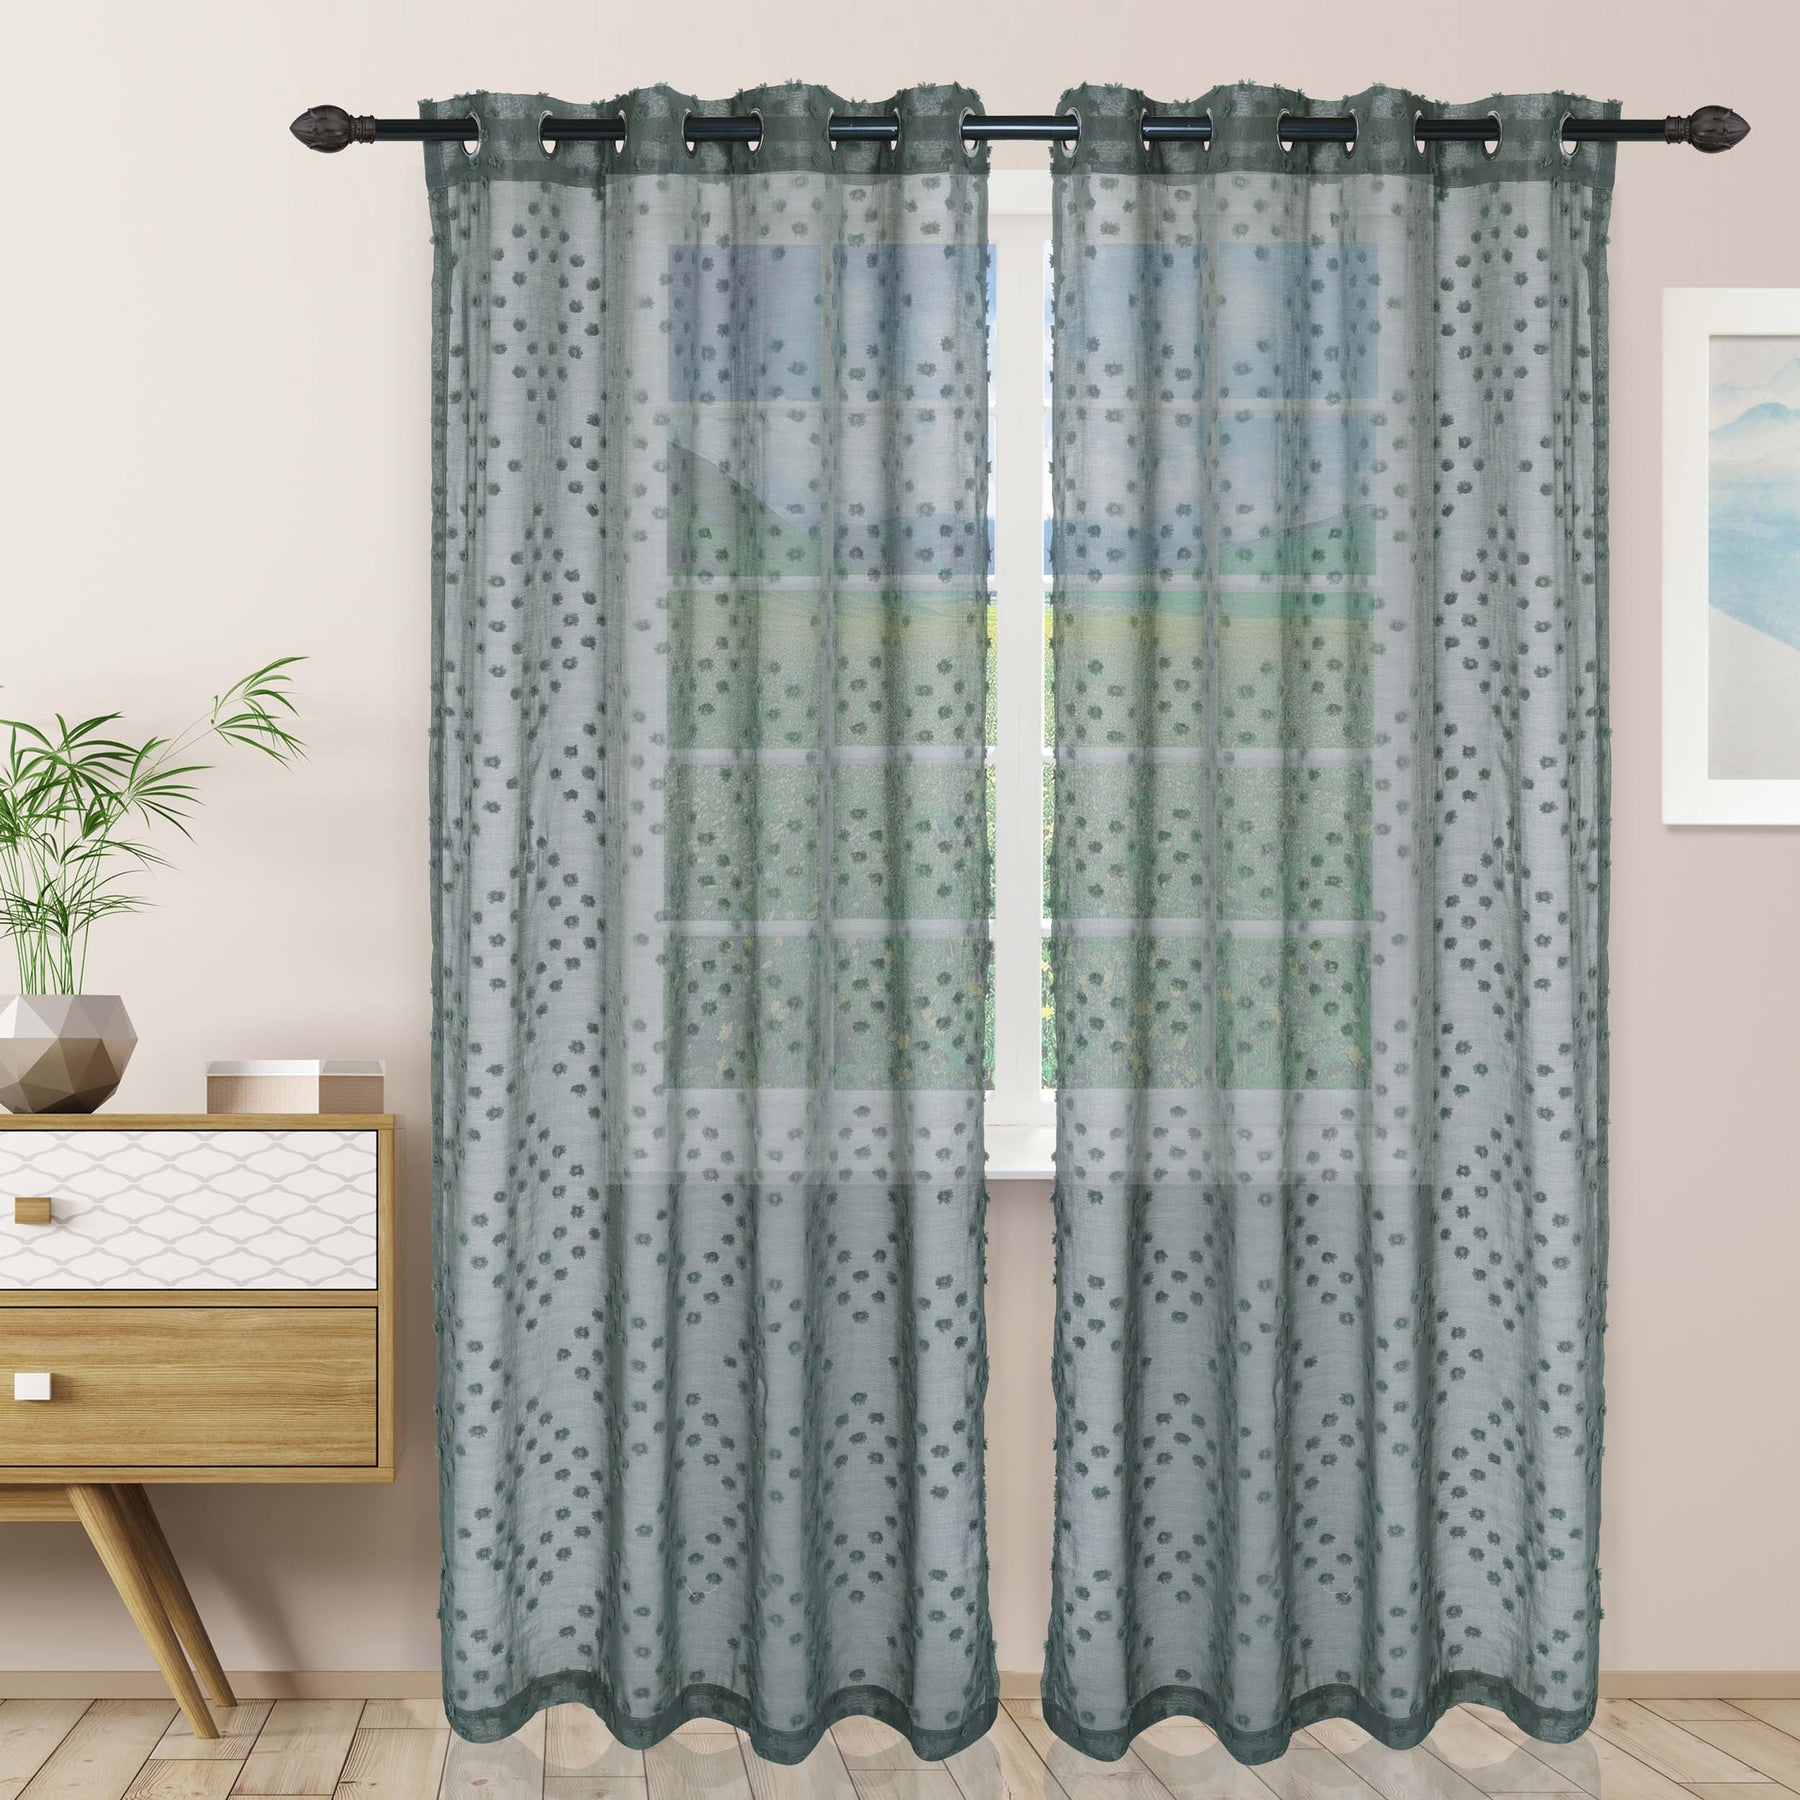  Sheer Poppy Floral Modern Textured Grommet Curtain Panels Set of 2 - Elmgreen